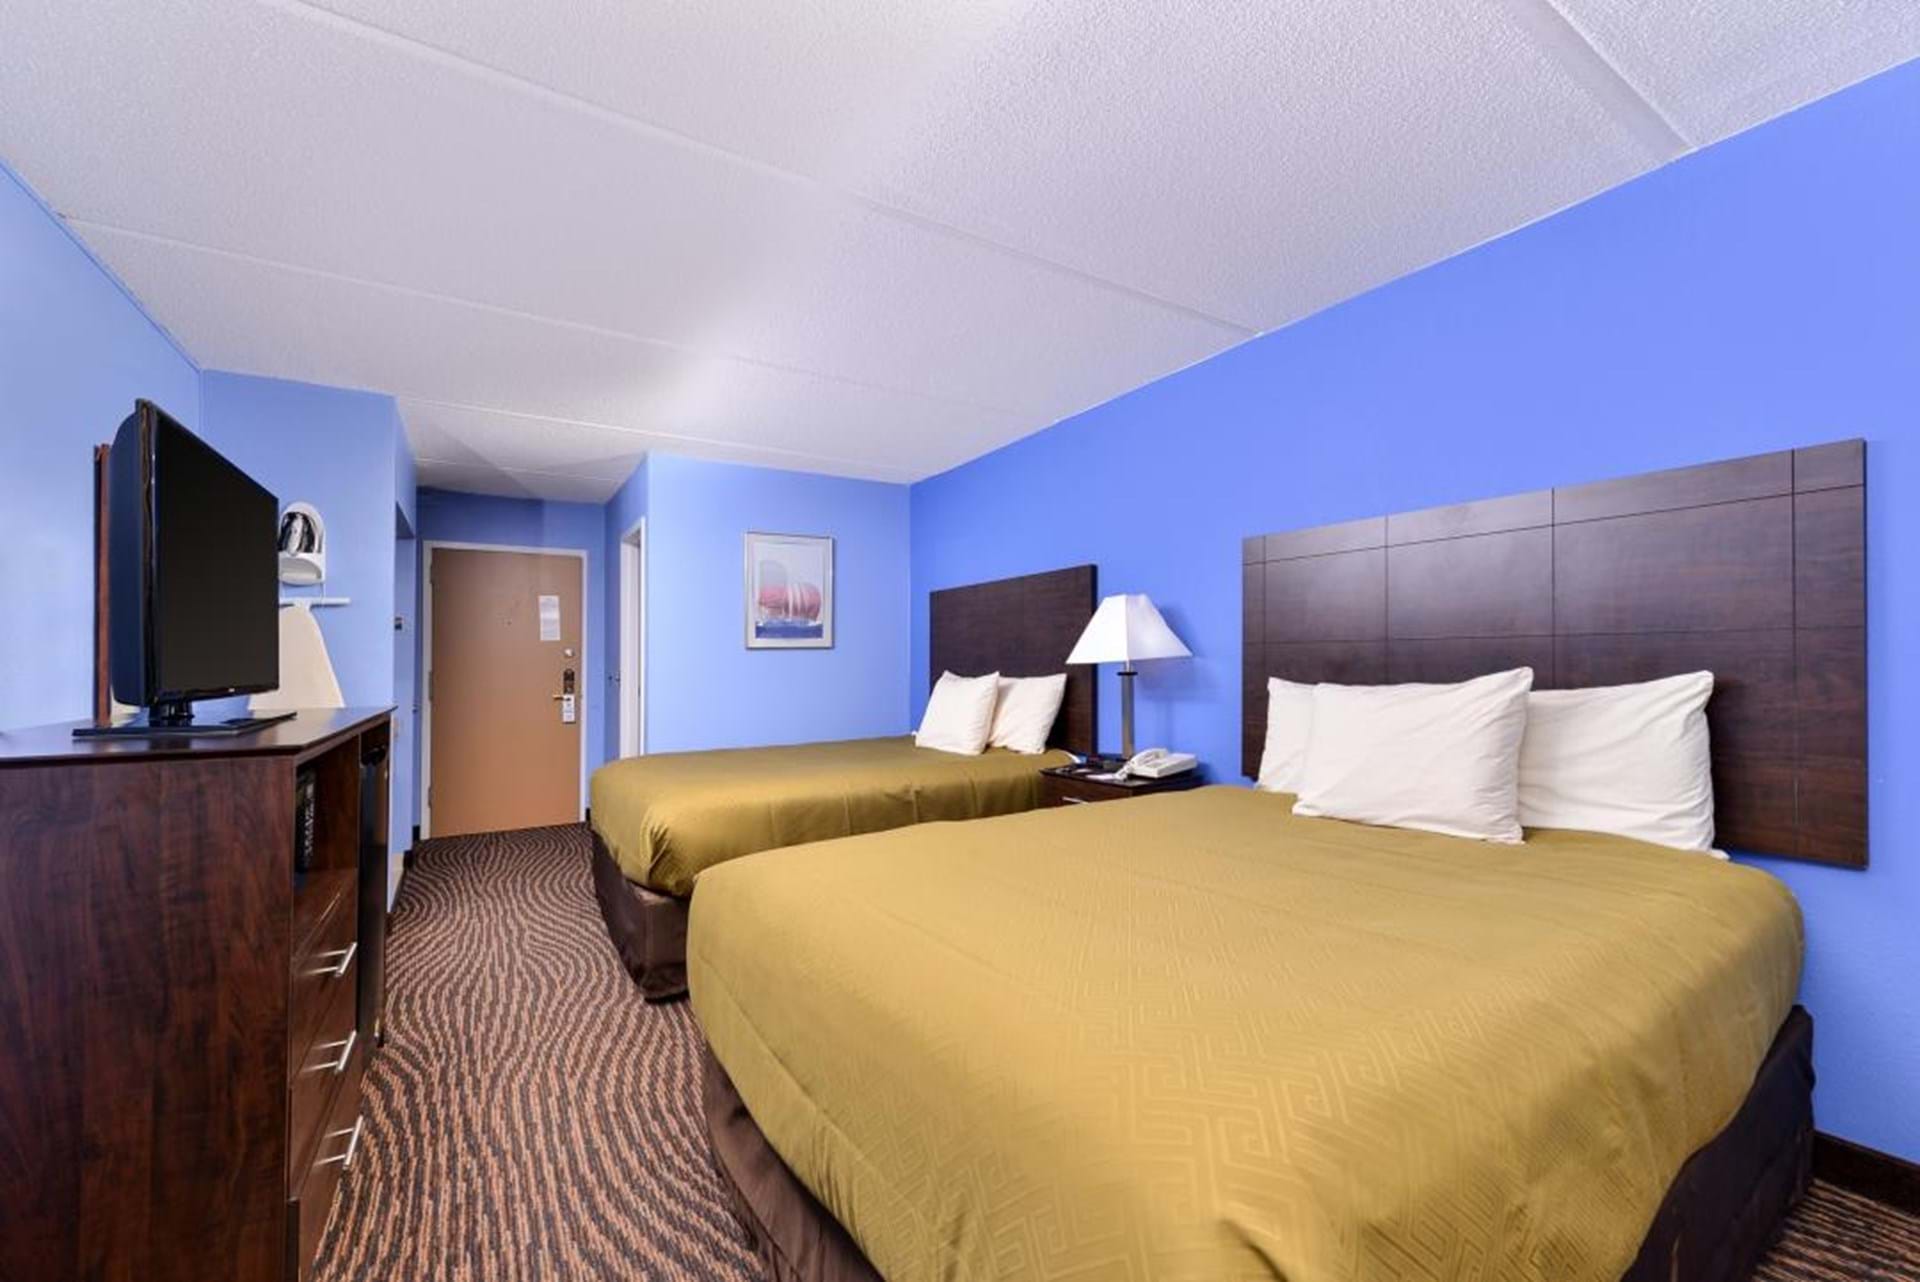 Clean, spacious rooms await you.